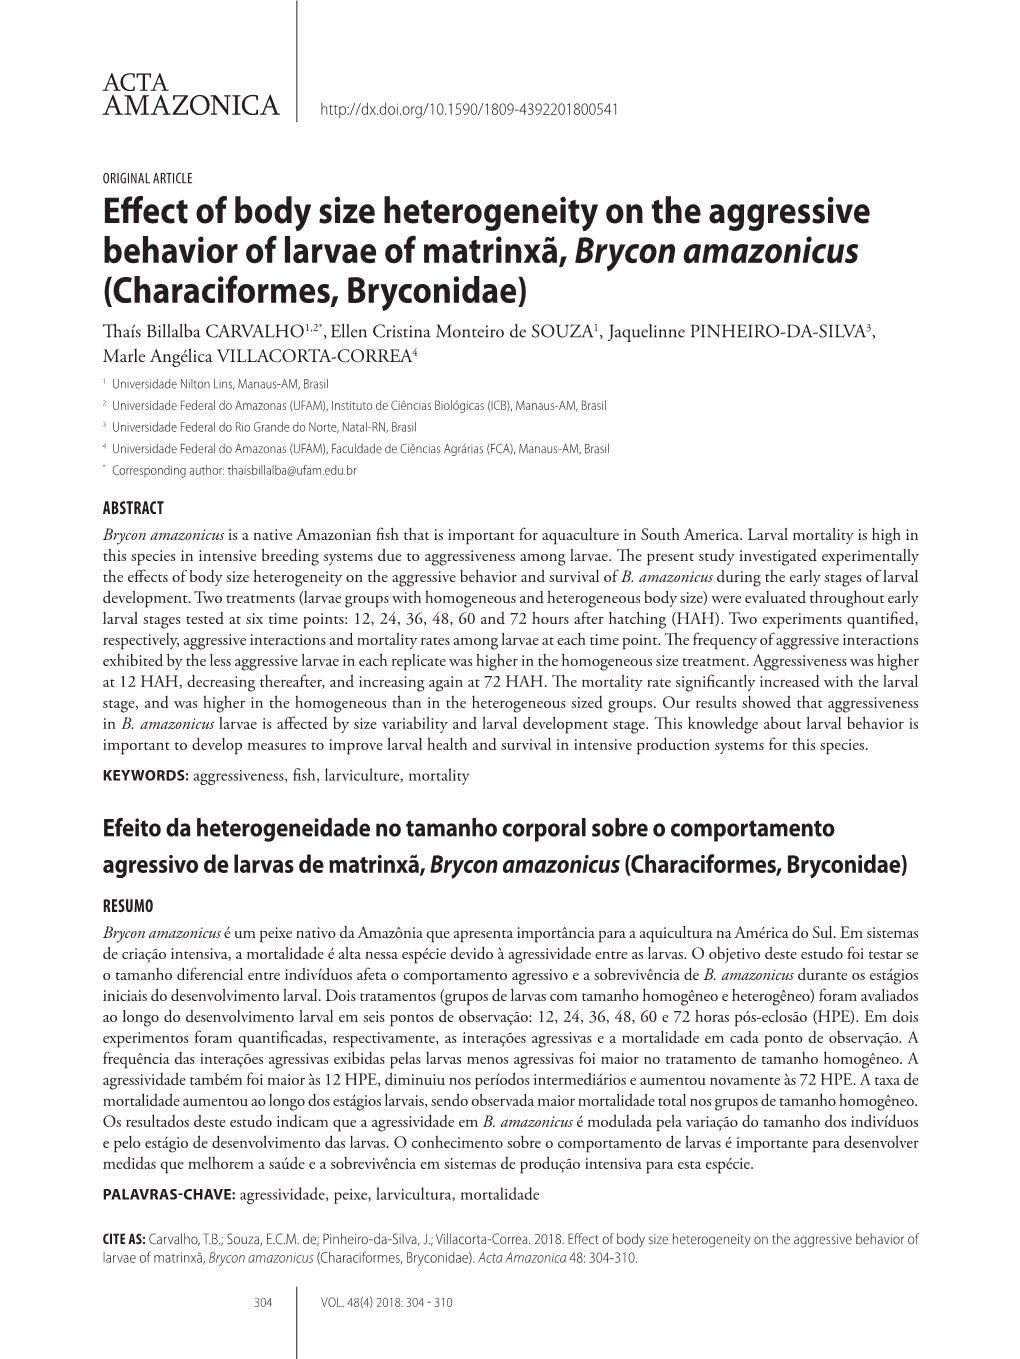 Effect of Body Size Heterogeneity on the Aggressive Behavior of Larvae Of